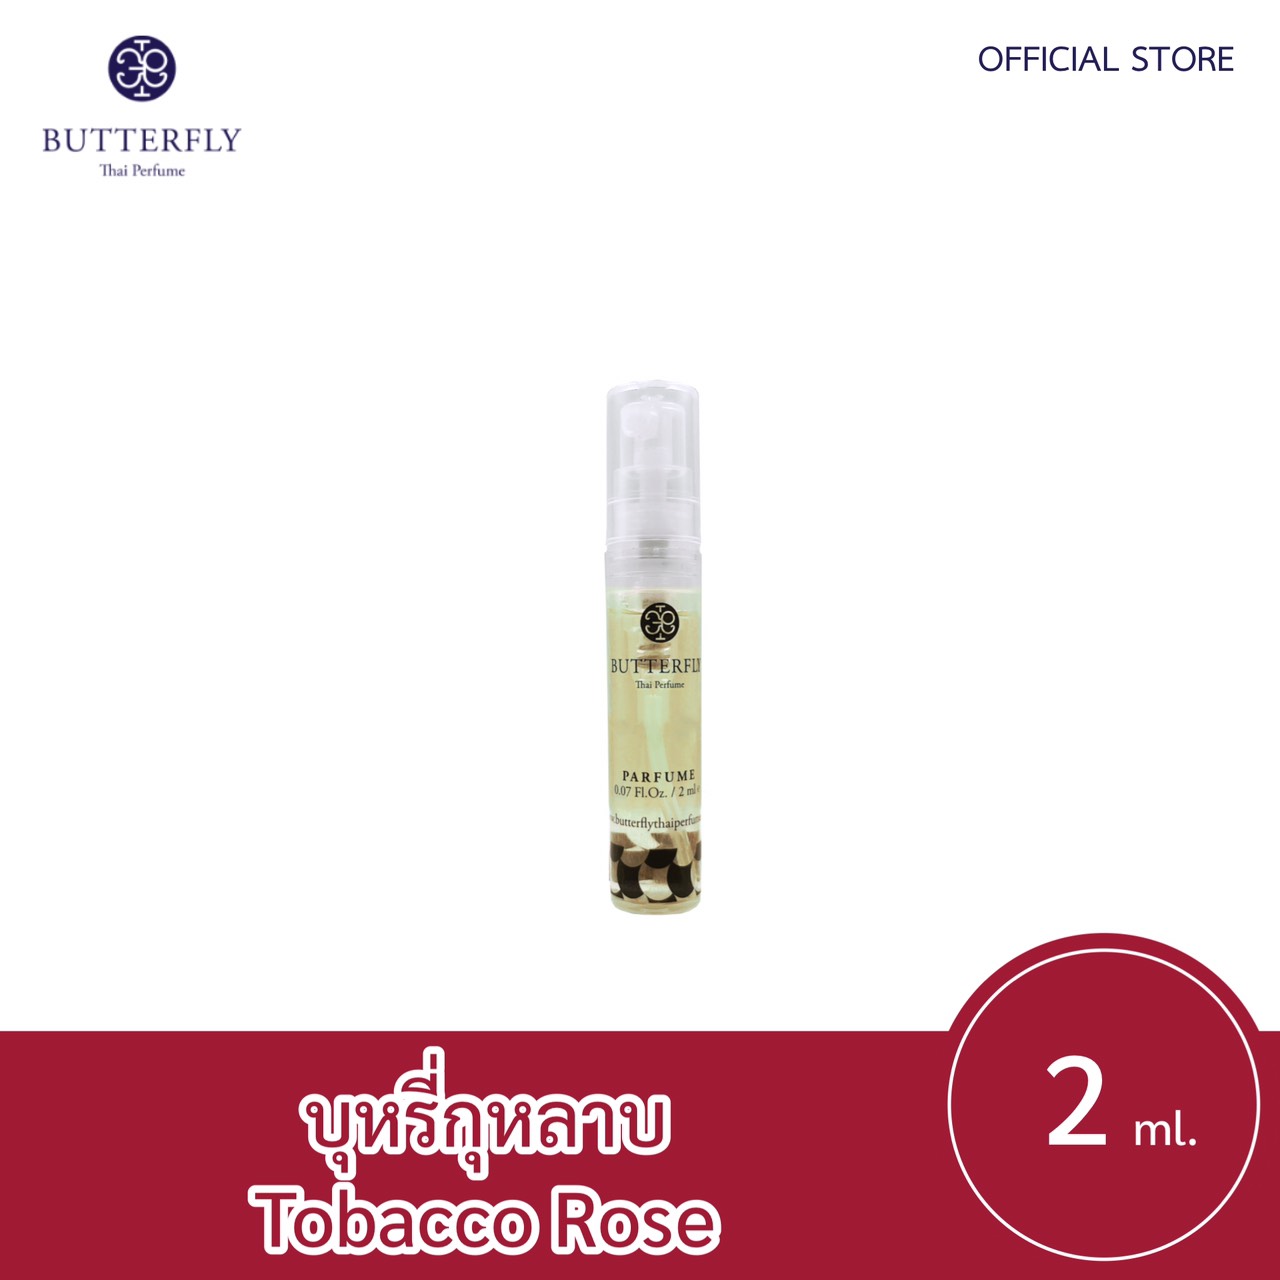 Butterfly Thai Perfume - น้ำหอมบัตเตอร์ฟลาย ไทย เพอร์ฟูม  ขนาดทดลอง 2ml.  กลิ่น บุหรี่กุหลาบปริมาณ (มล.) 2